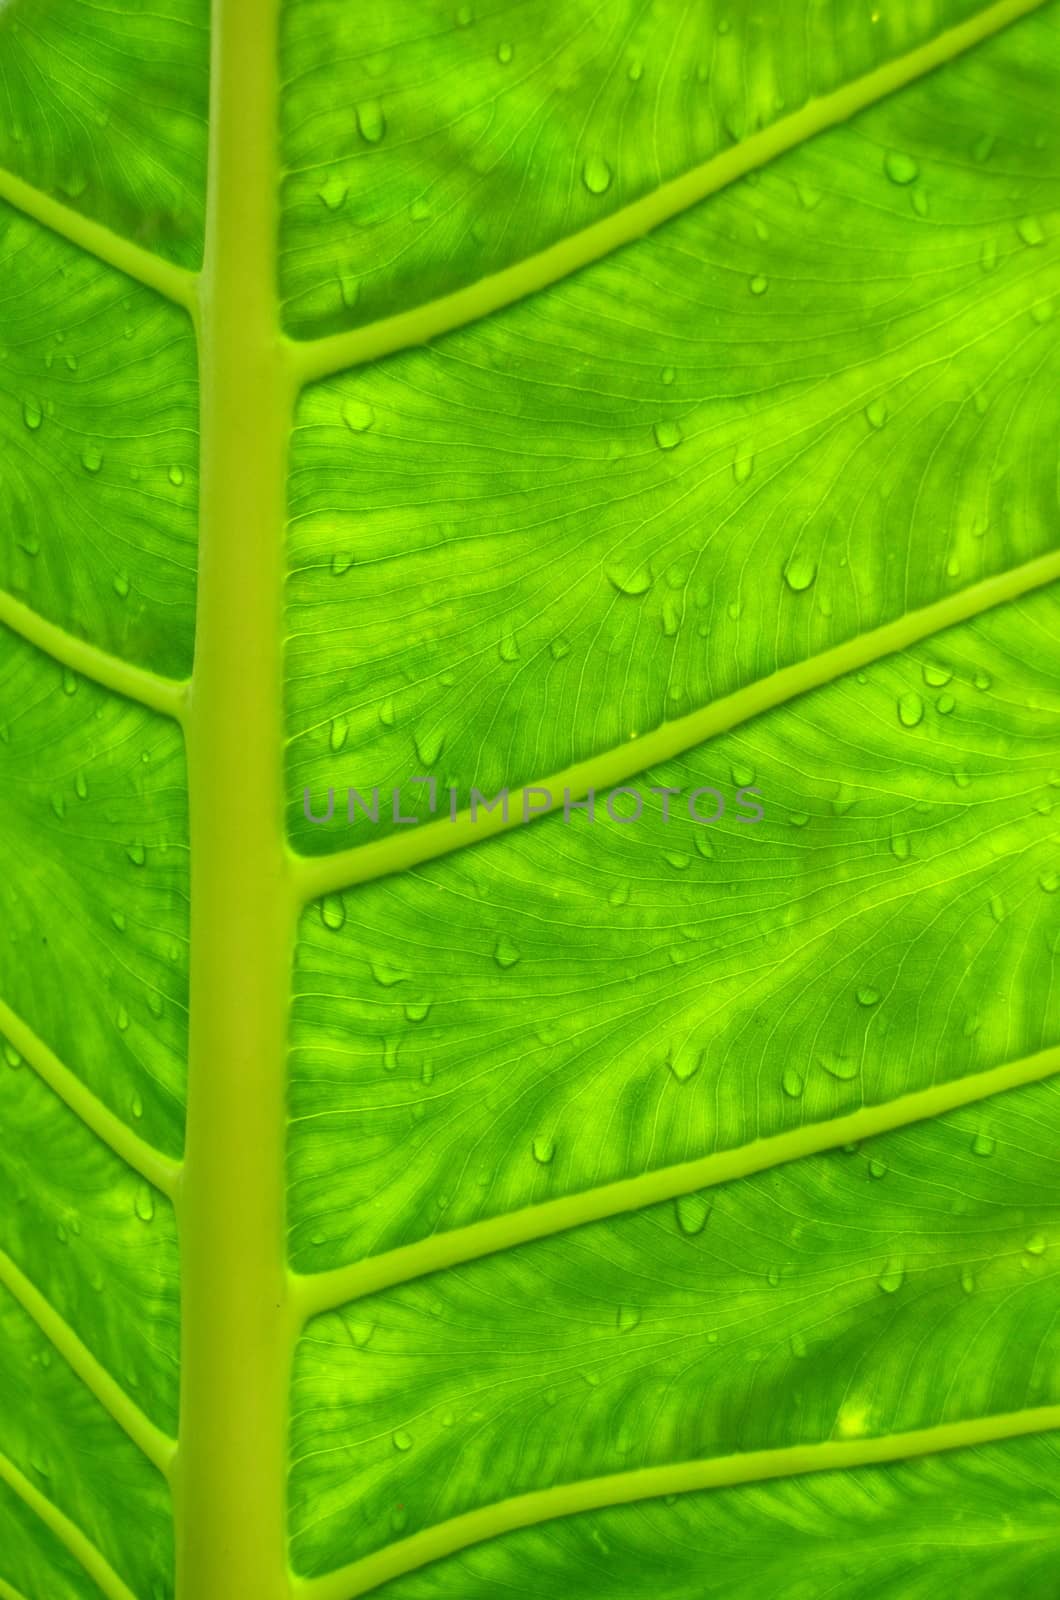 Wet Tropical Leaf by mrdoomits